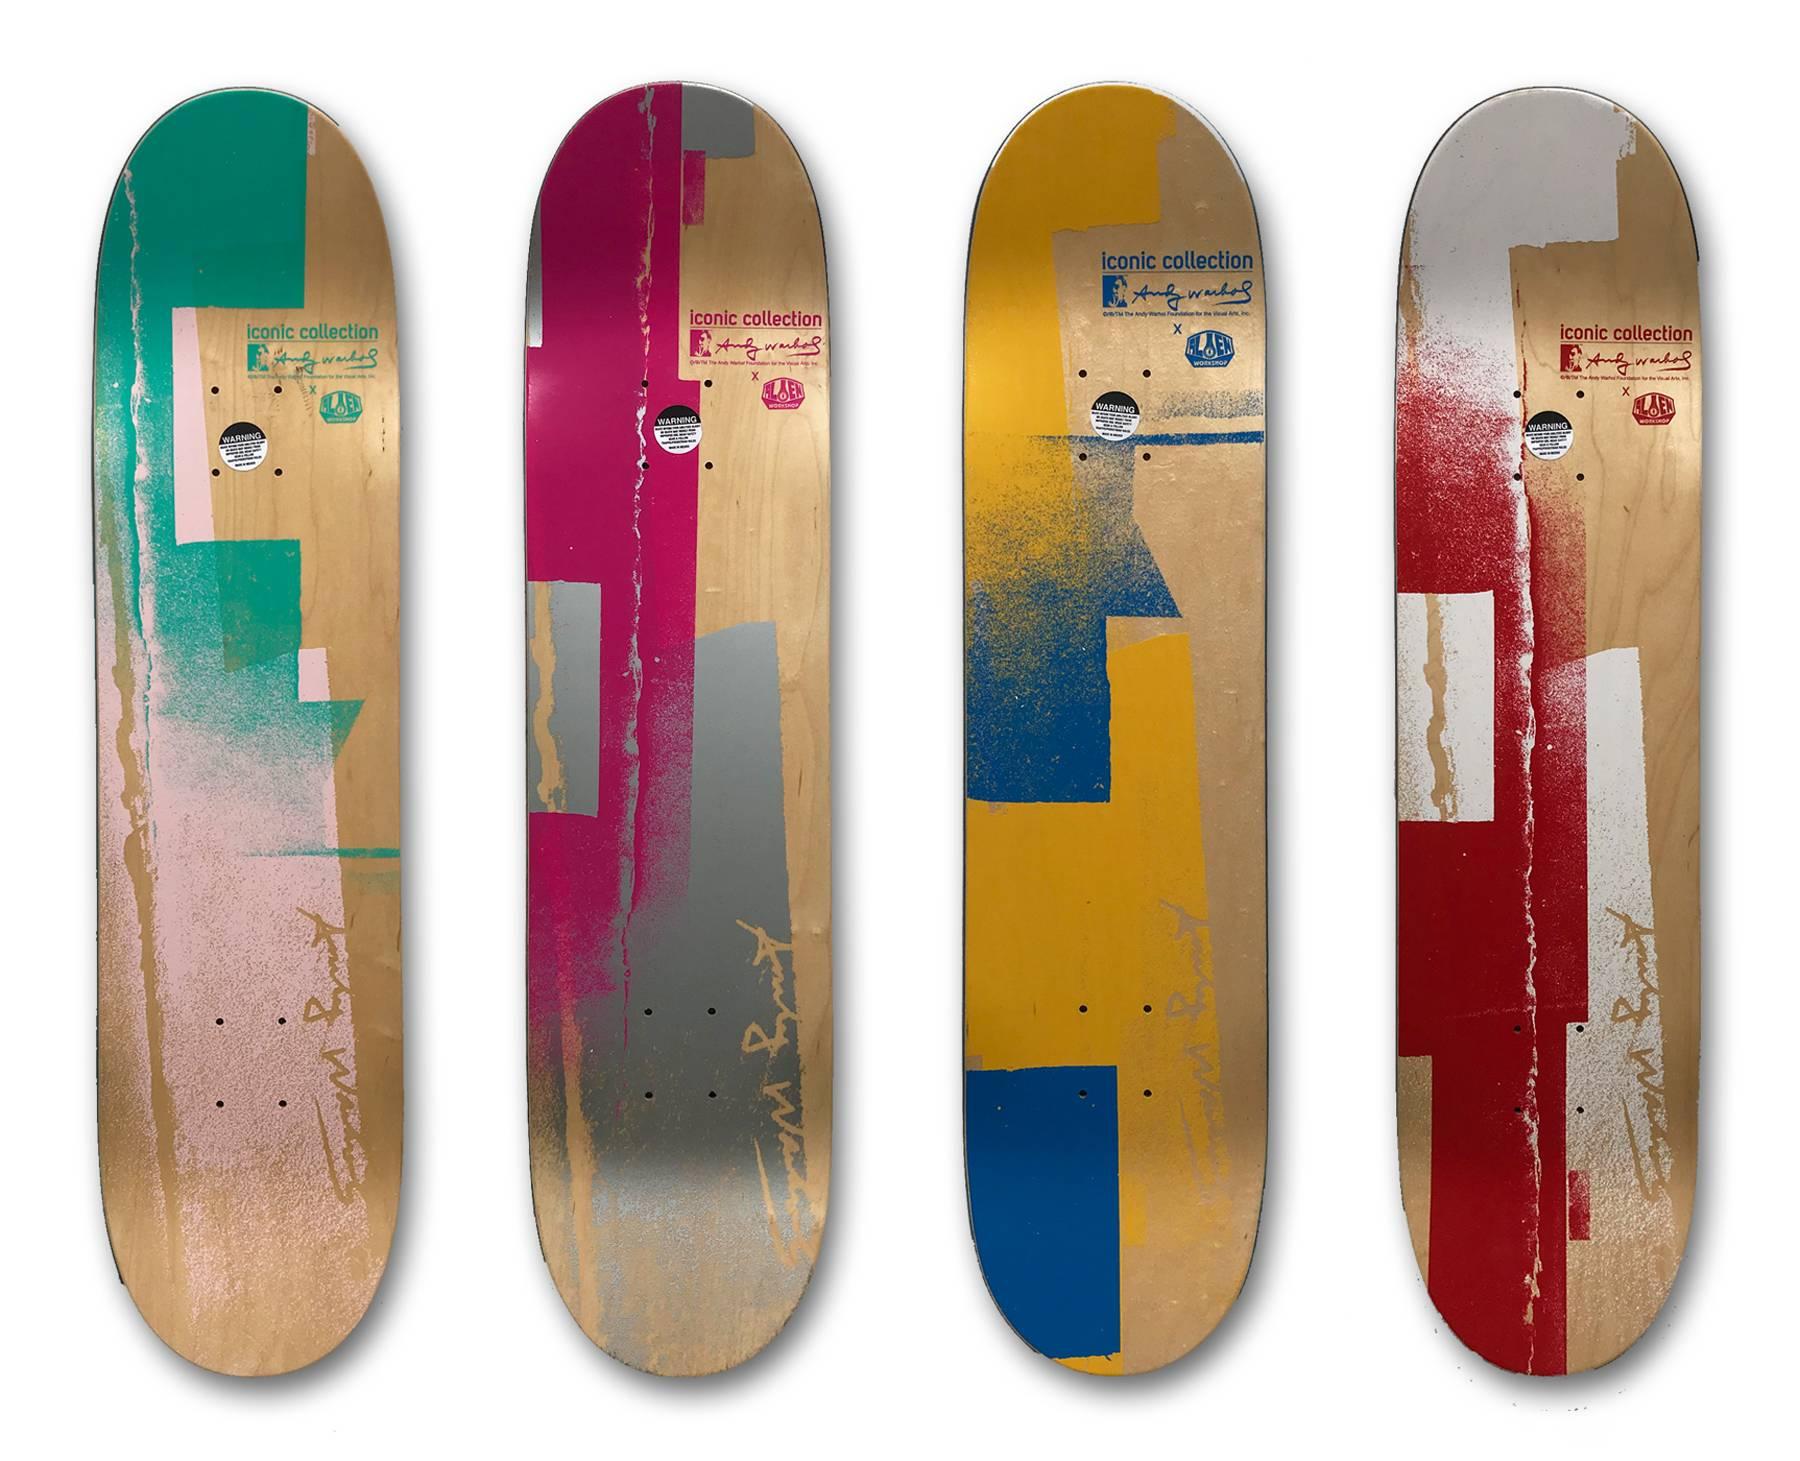 Set of 4 Skateboard Decks (Marilyn, Warhol Portrait, Elvis, Campbells Soup Cans) - Print by (after) Andy Warhol